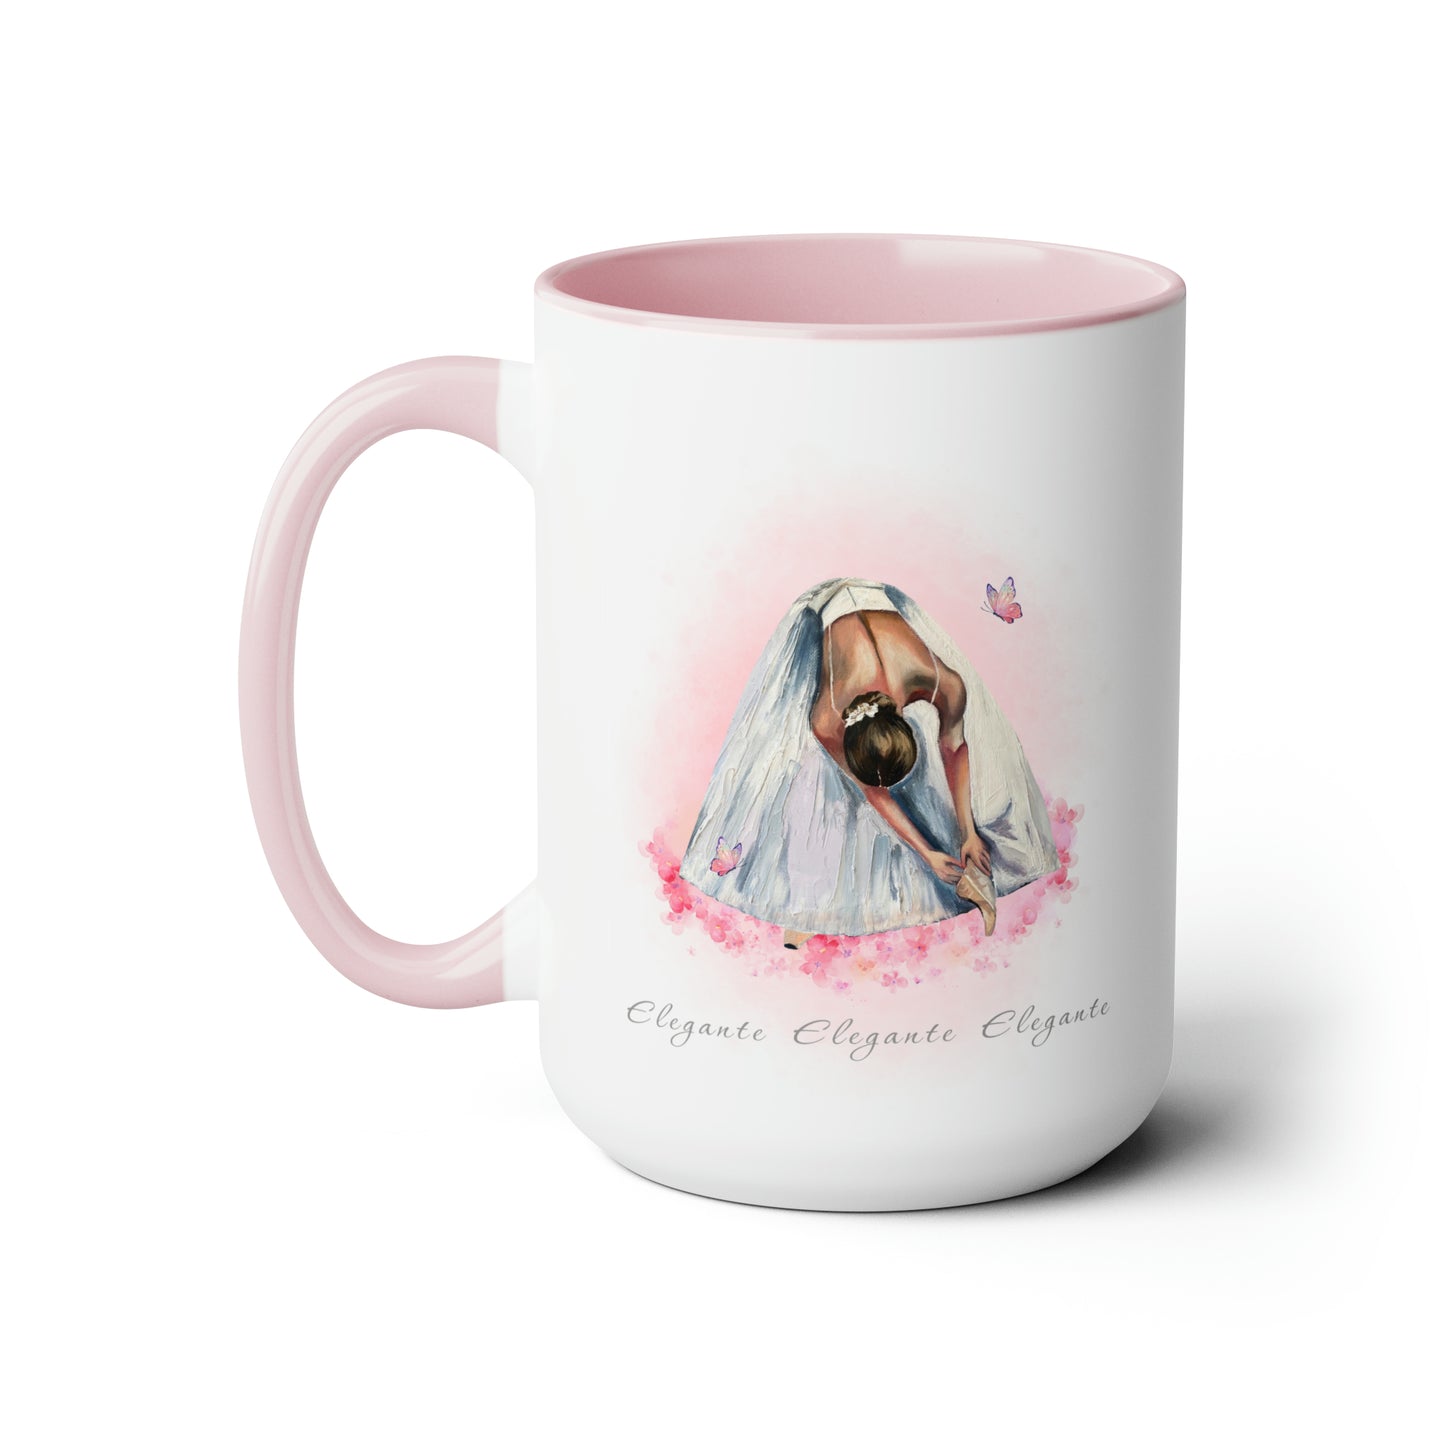 Two-Tone Coffee Mugs, 15oz - Ballerina Dancer - pink rim